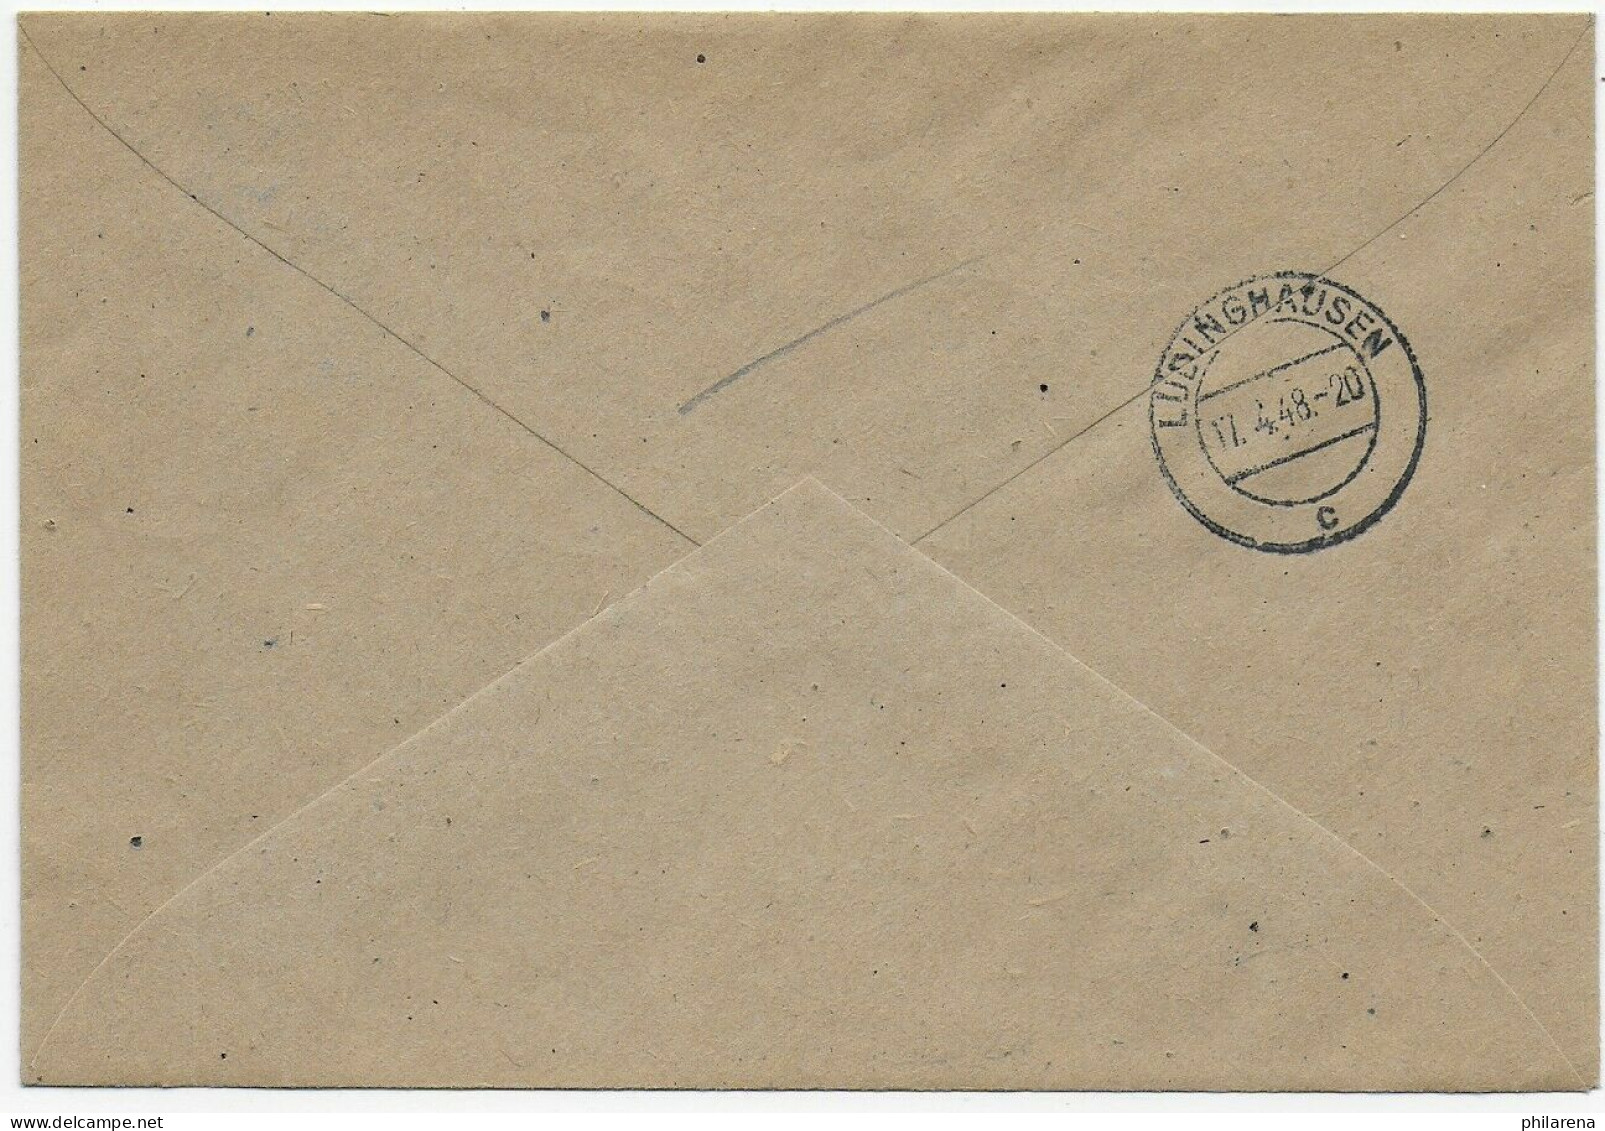 Einschreiben Seppenrade Nach Lüdinghausen, 1948 - Covers & Documents